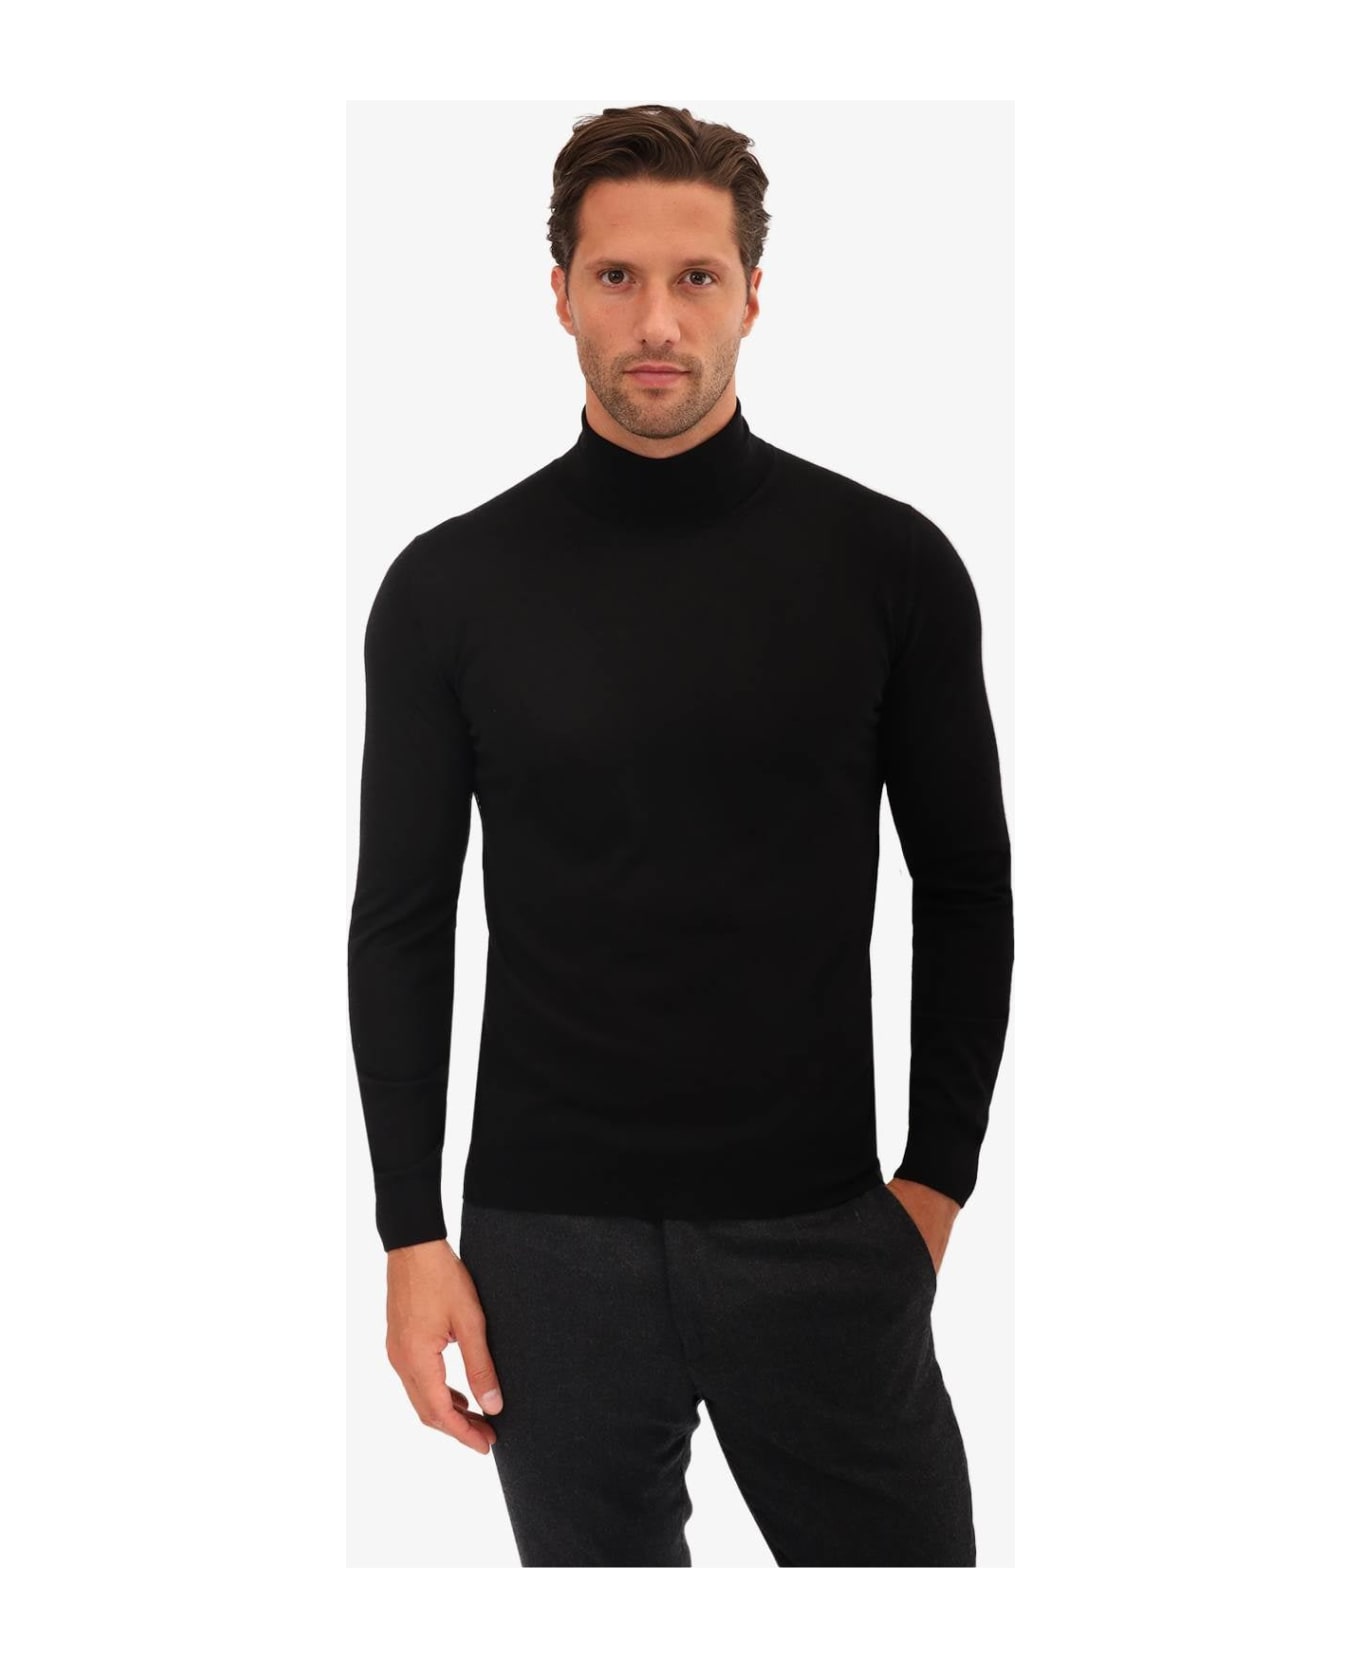 Larusmiani Turtleneck Sweater 'pullman' Sweater - Black